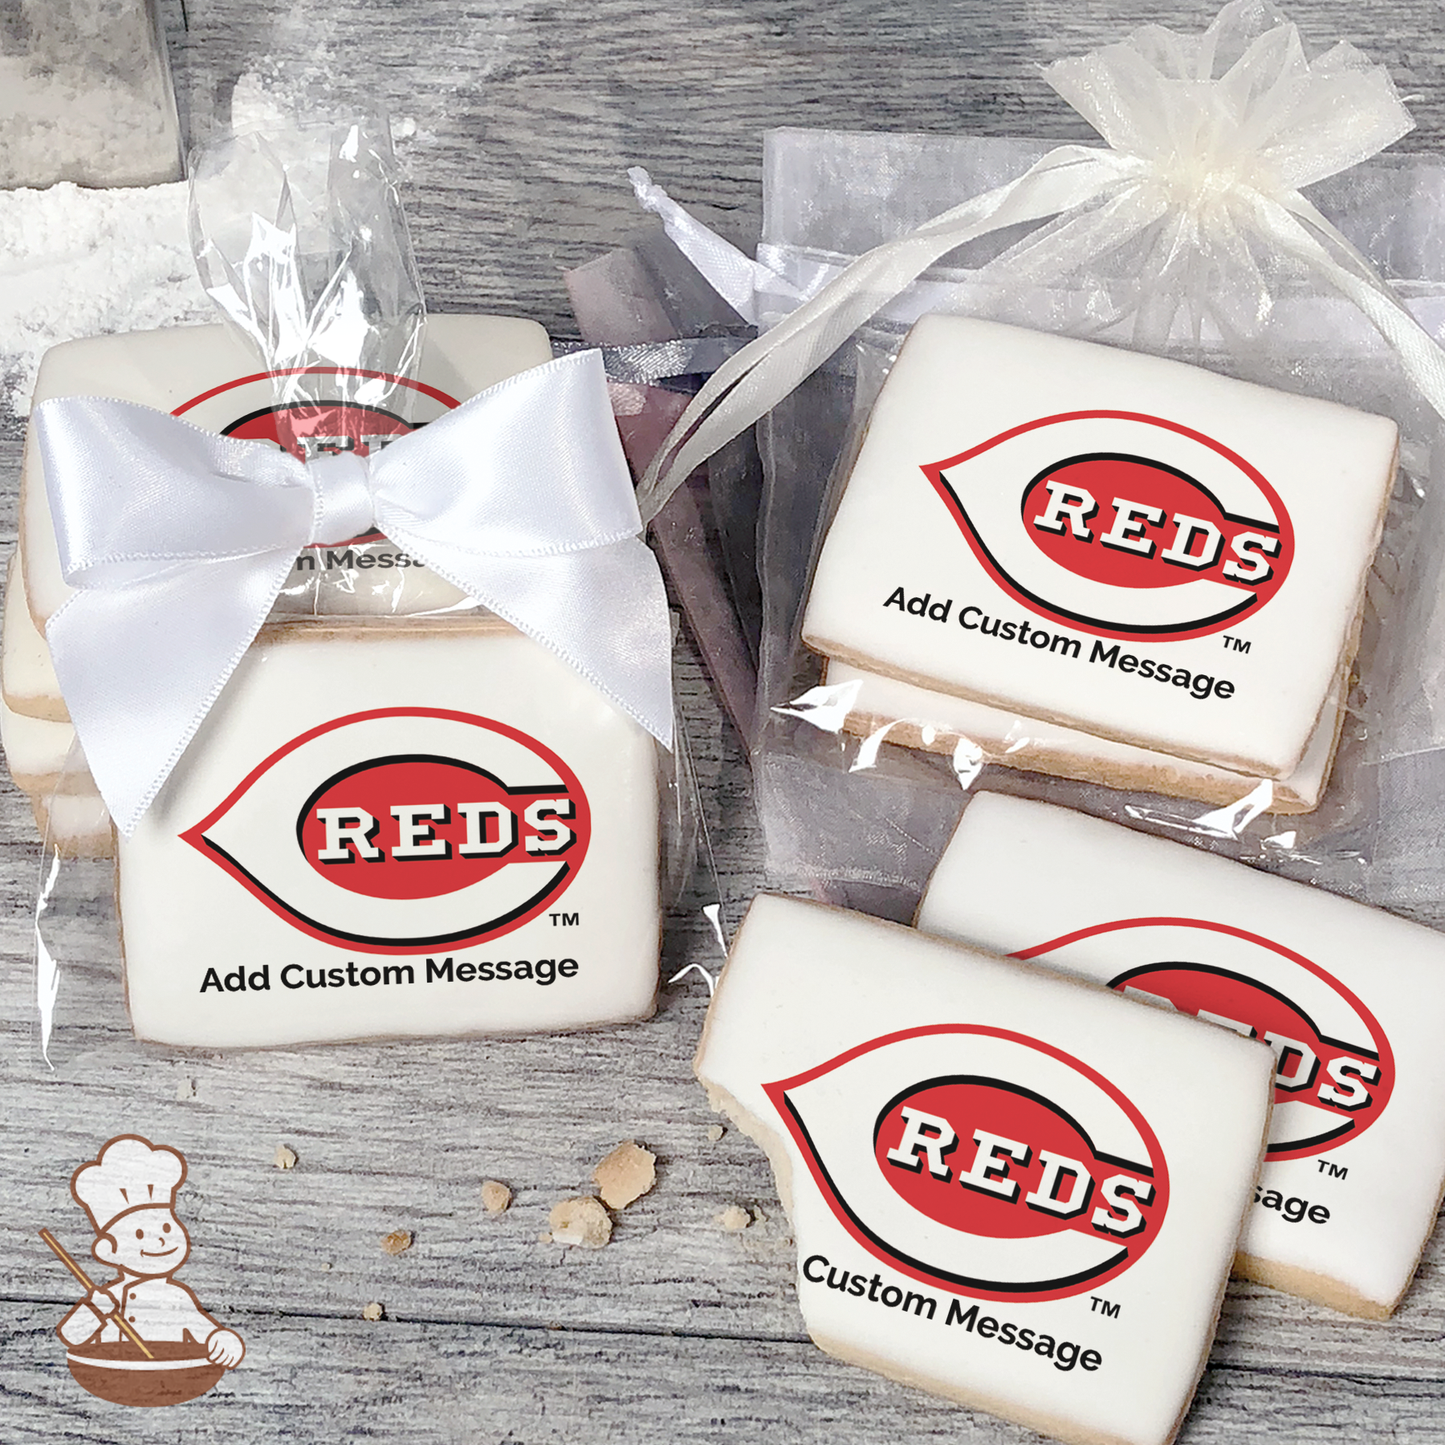 MLB Cincinnati Reds Custom Message Cookies (Rectangle)